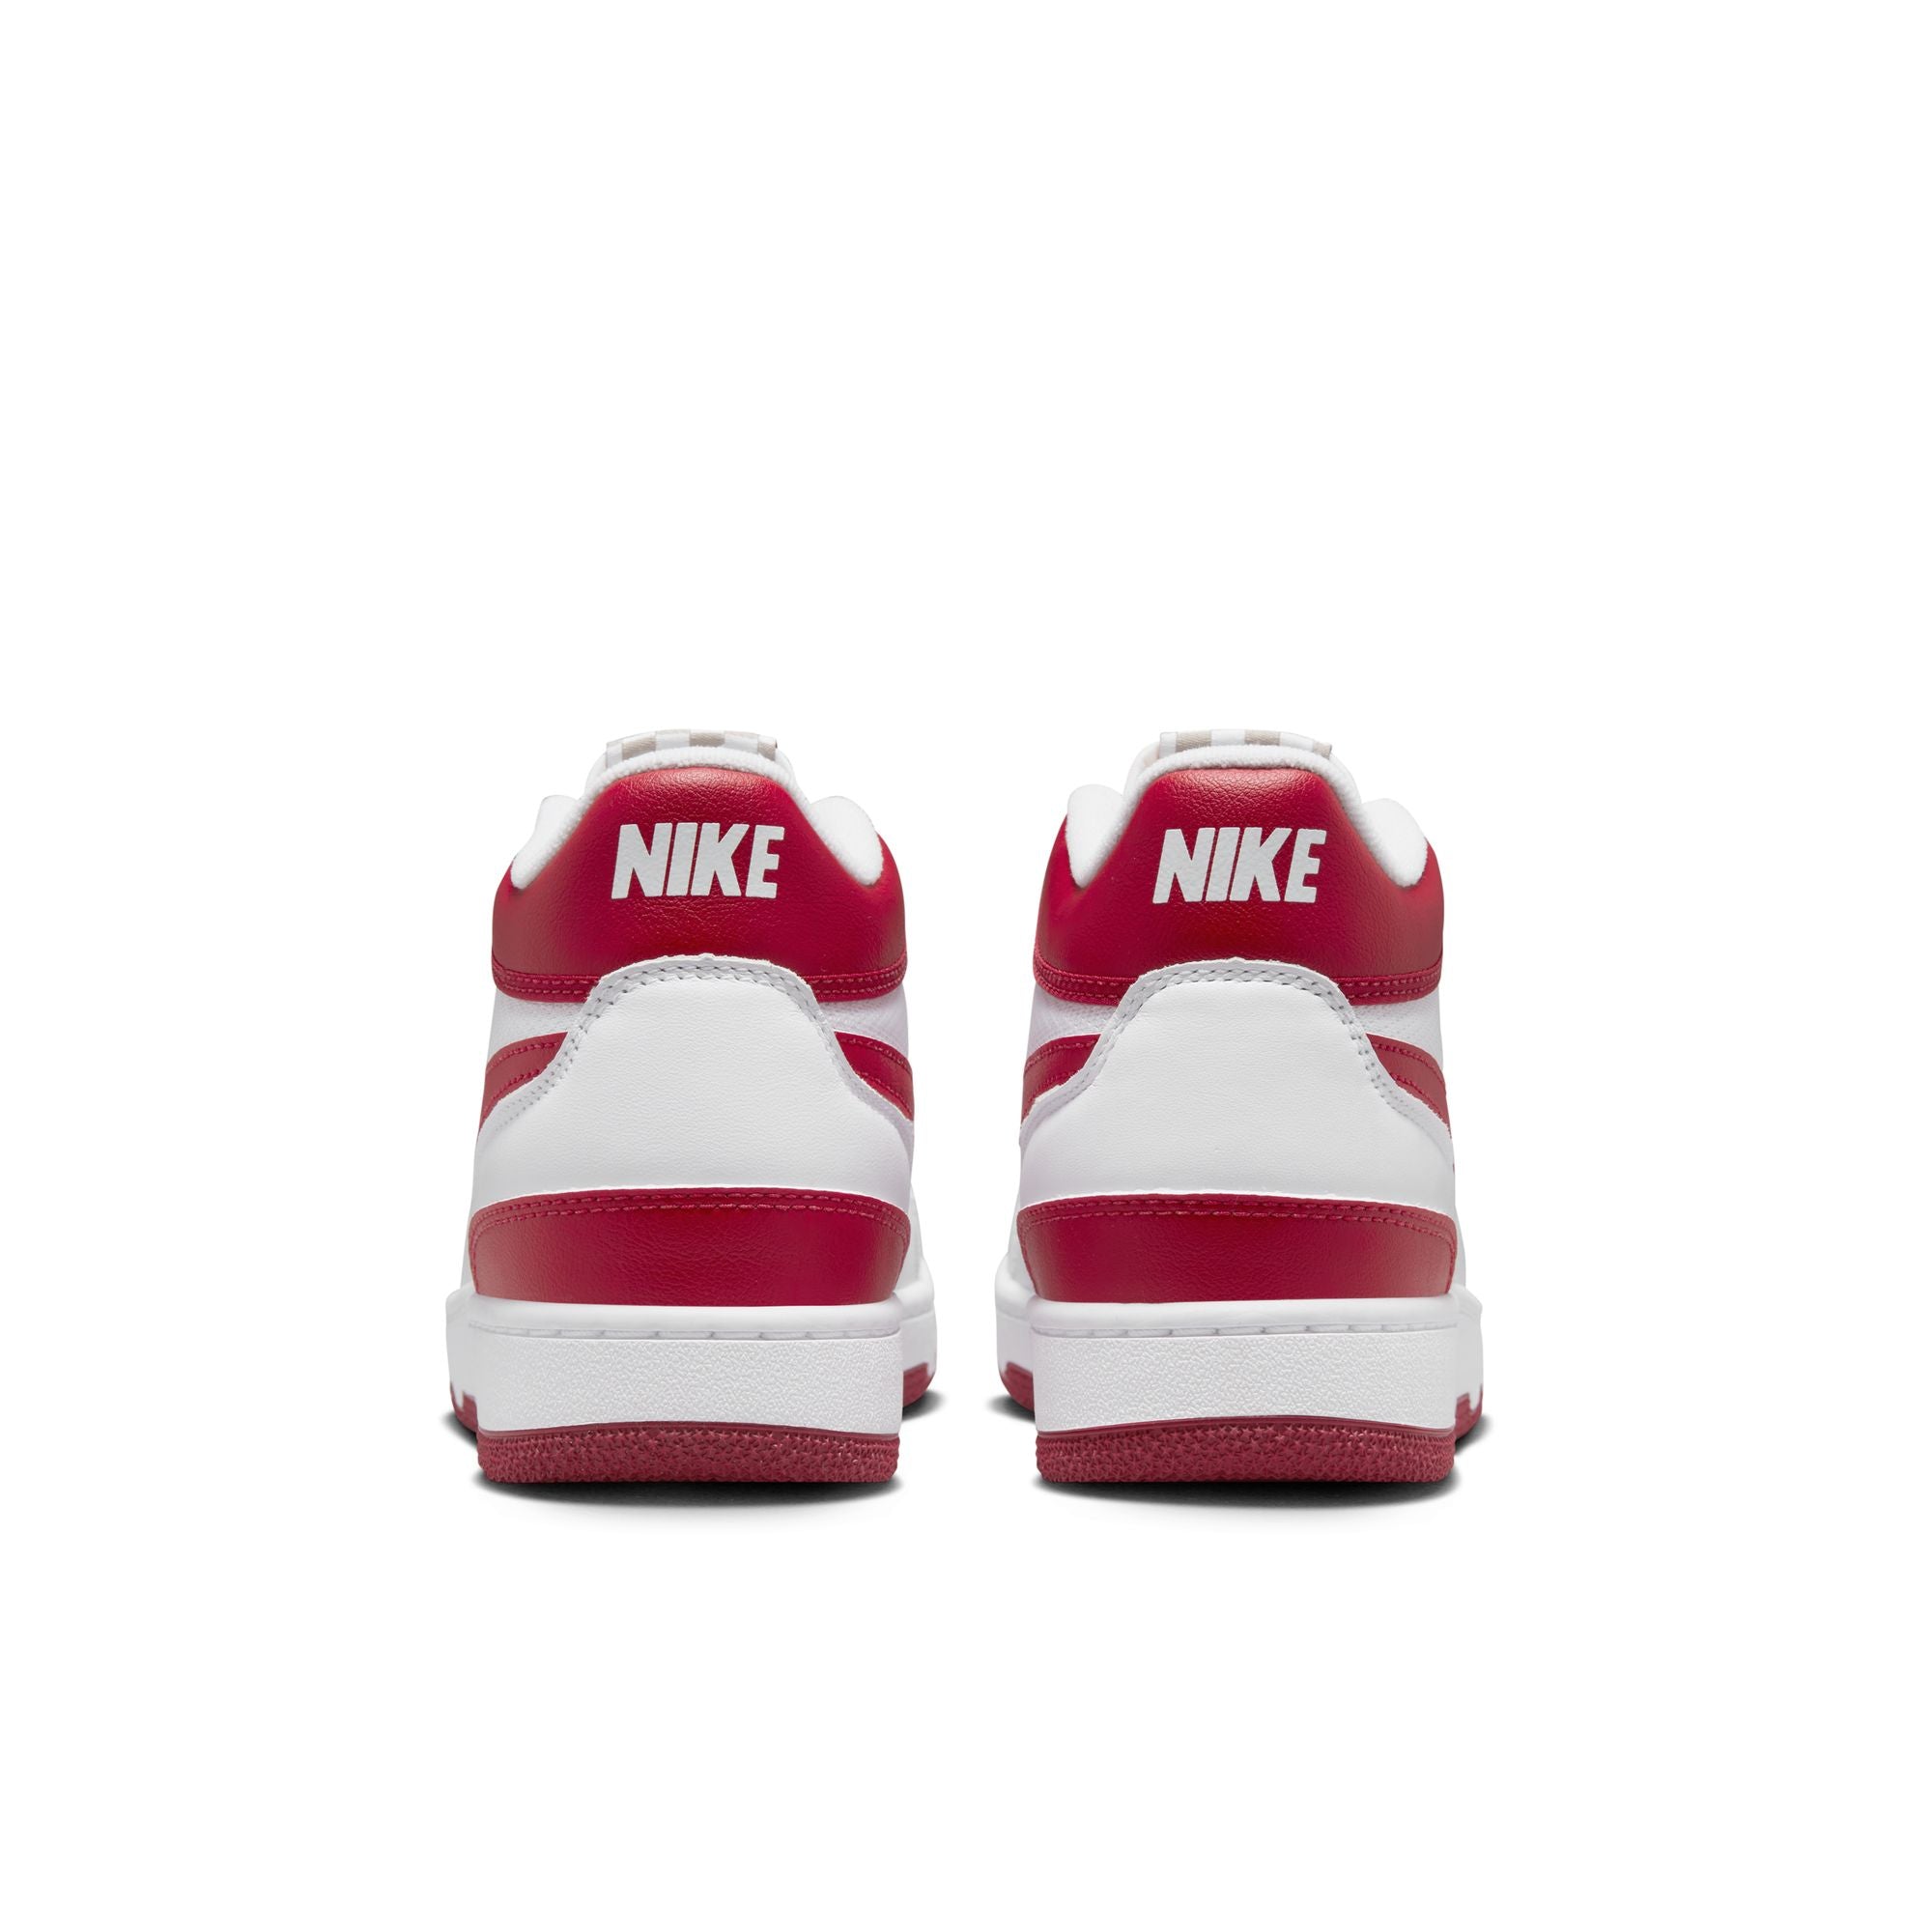 NIKE - Nike Attack Qs Sp - (White/Red Crush-White)